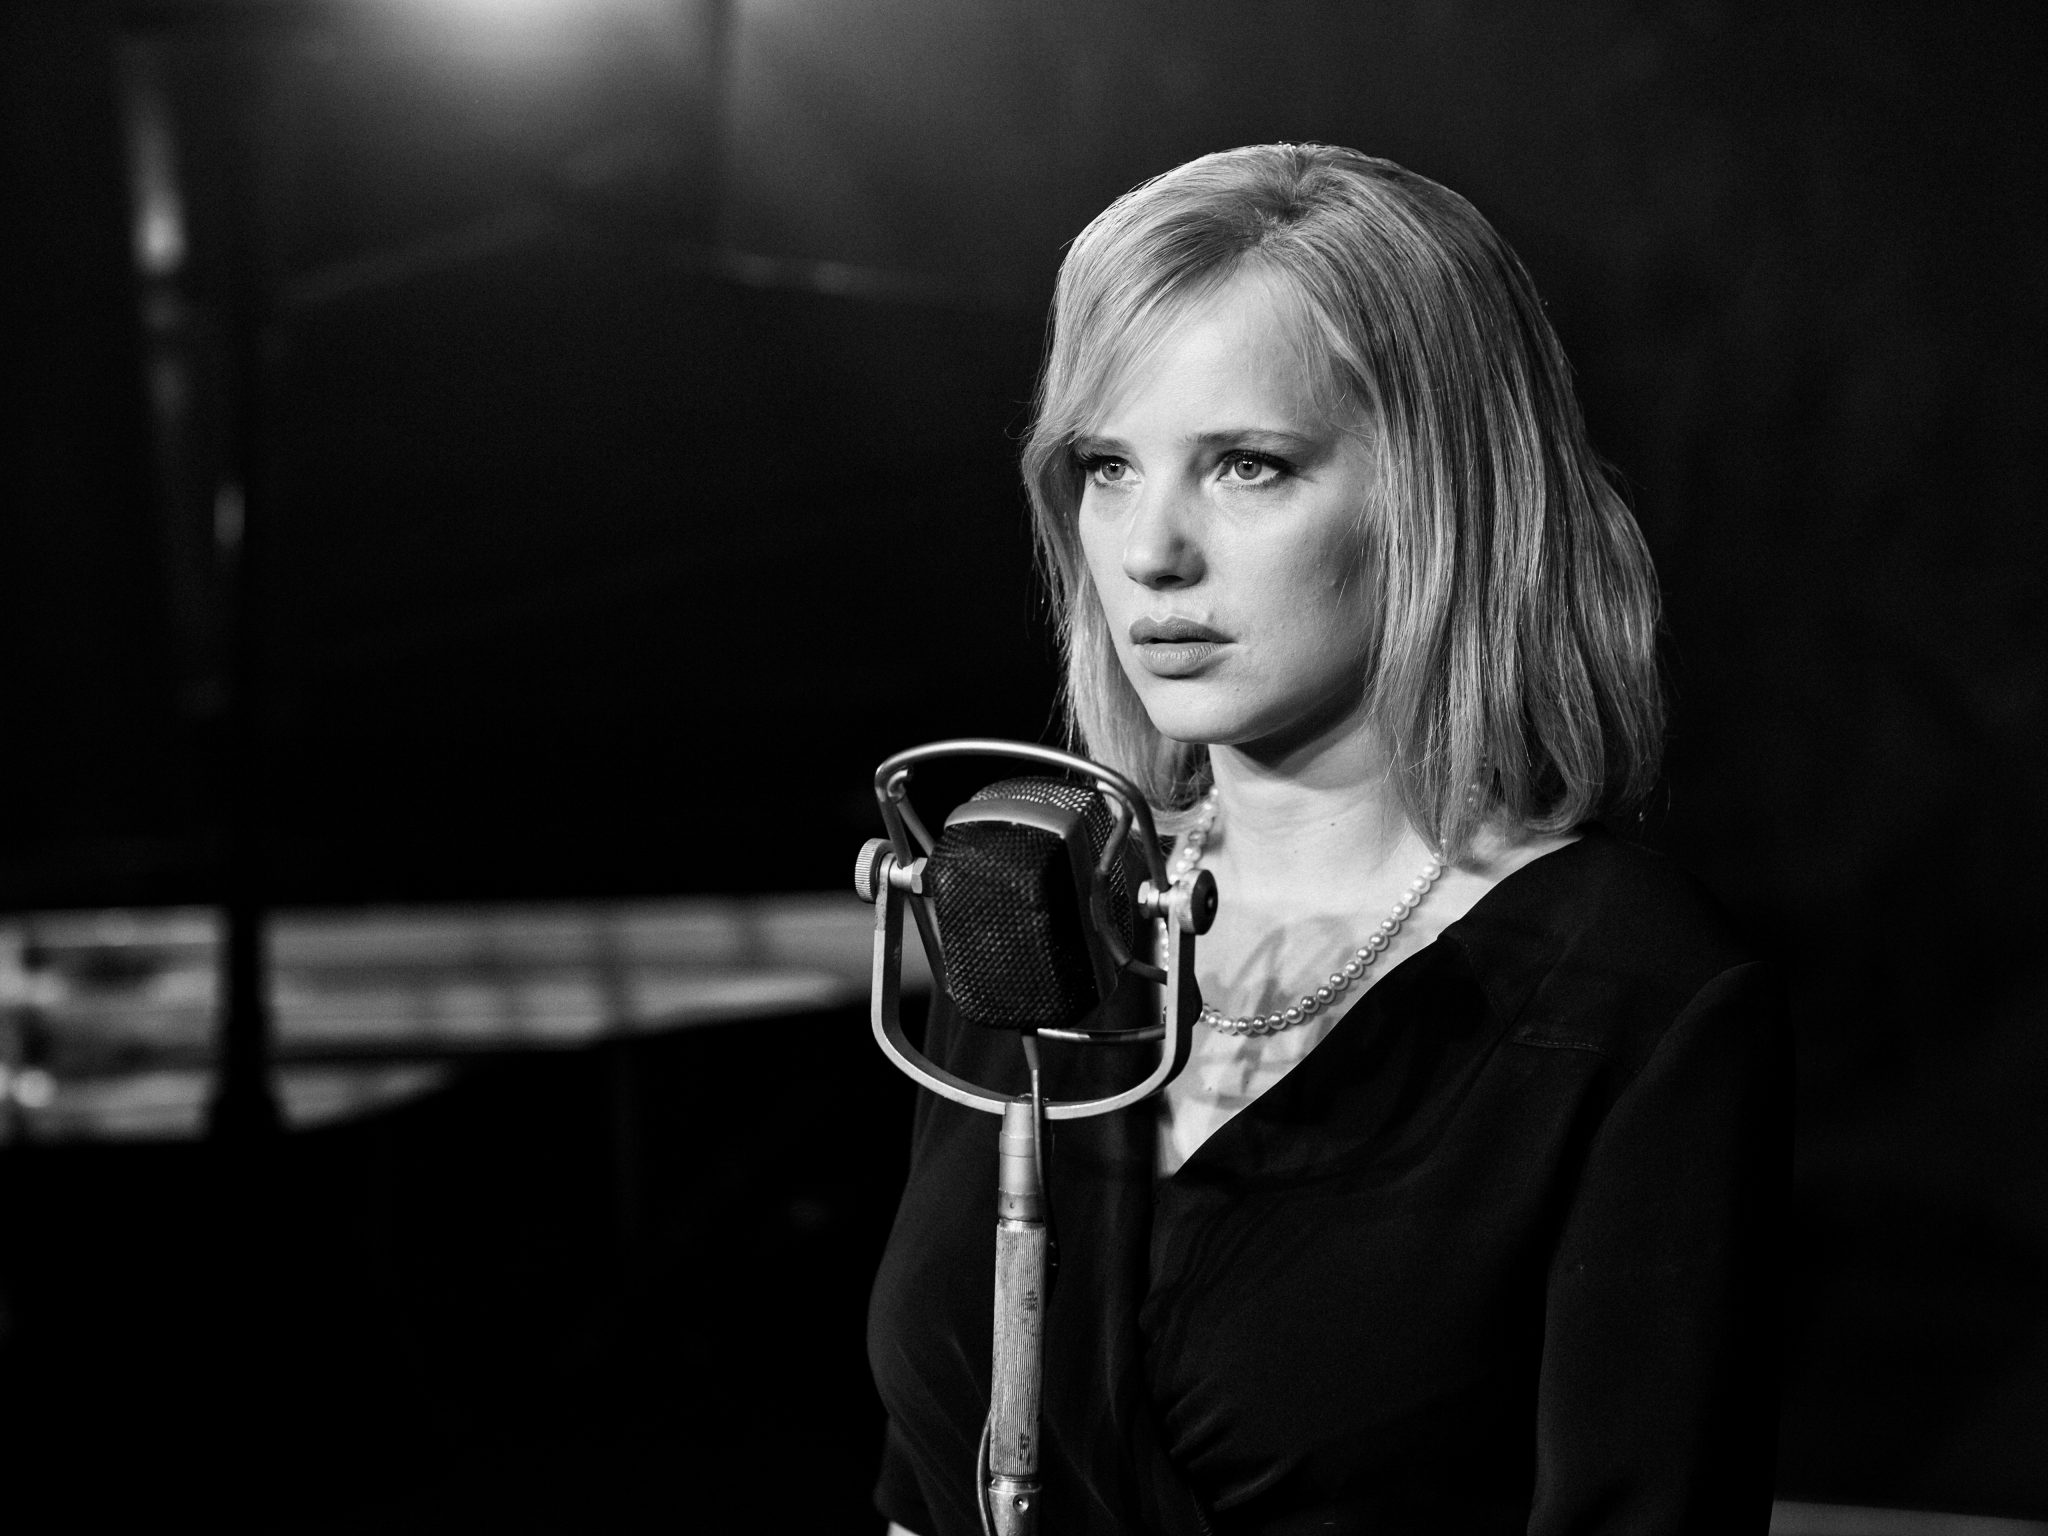 Cold War, il nuovo film di Paweł Pawlikowski, premio oscar 2015 con Ida